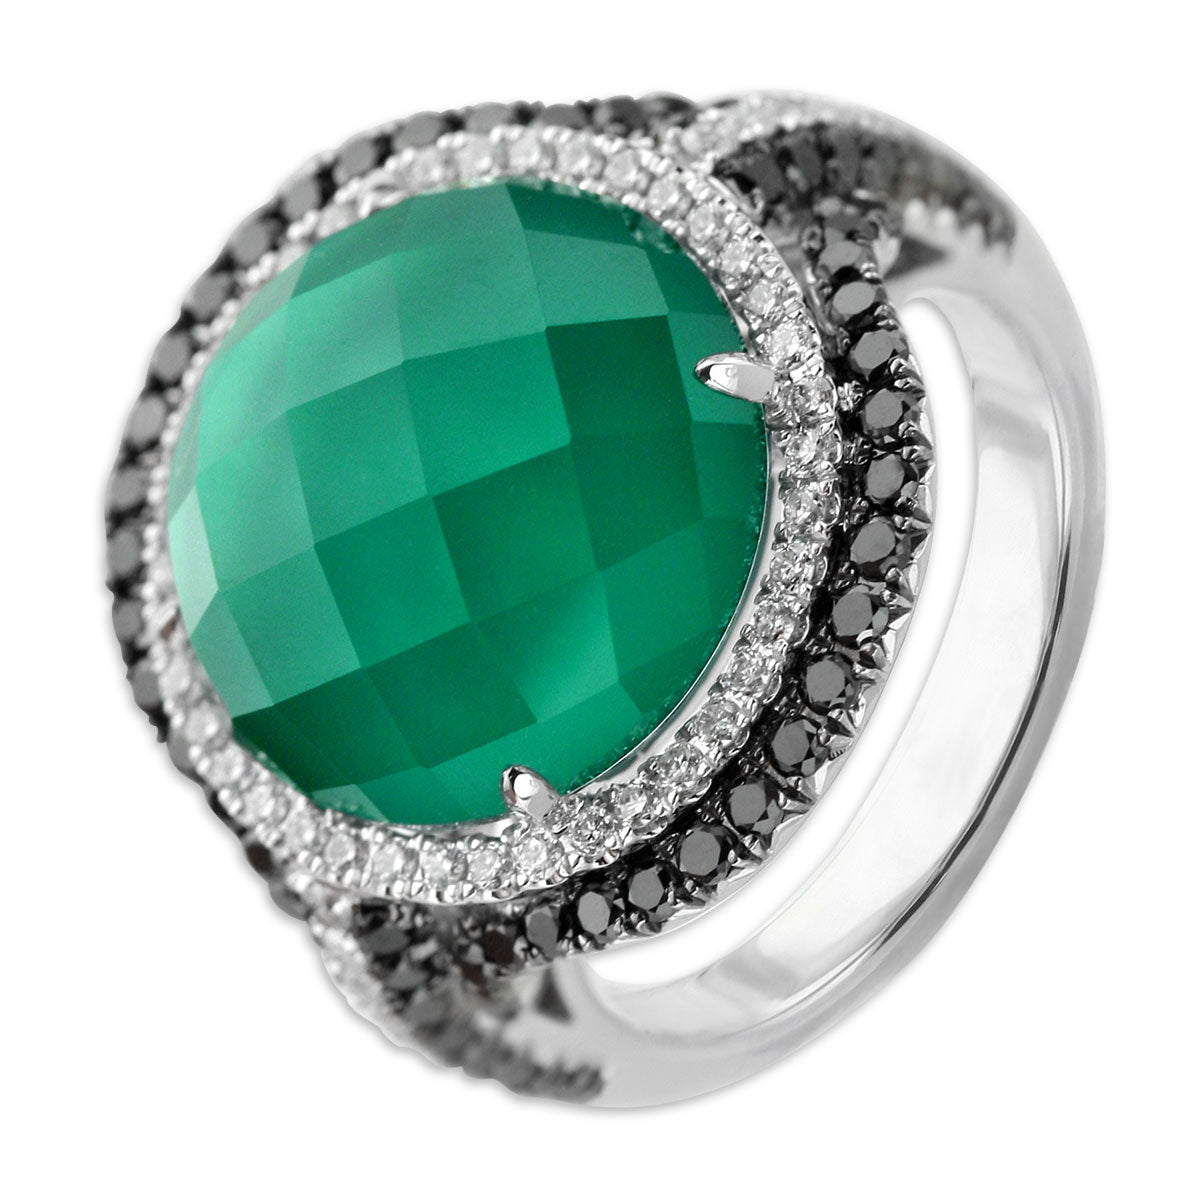 Green Agate Doublet & Diamonds-339575